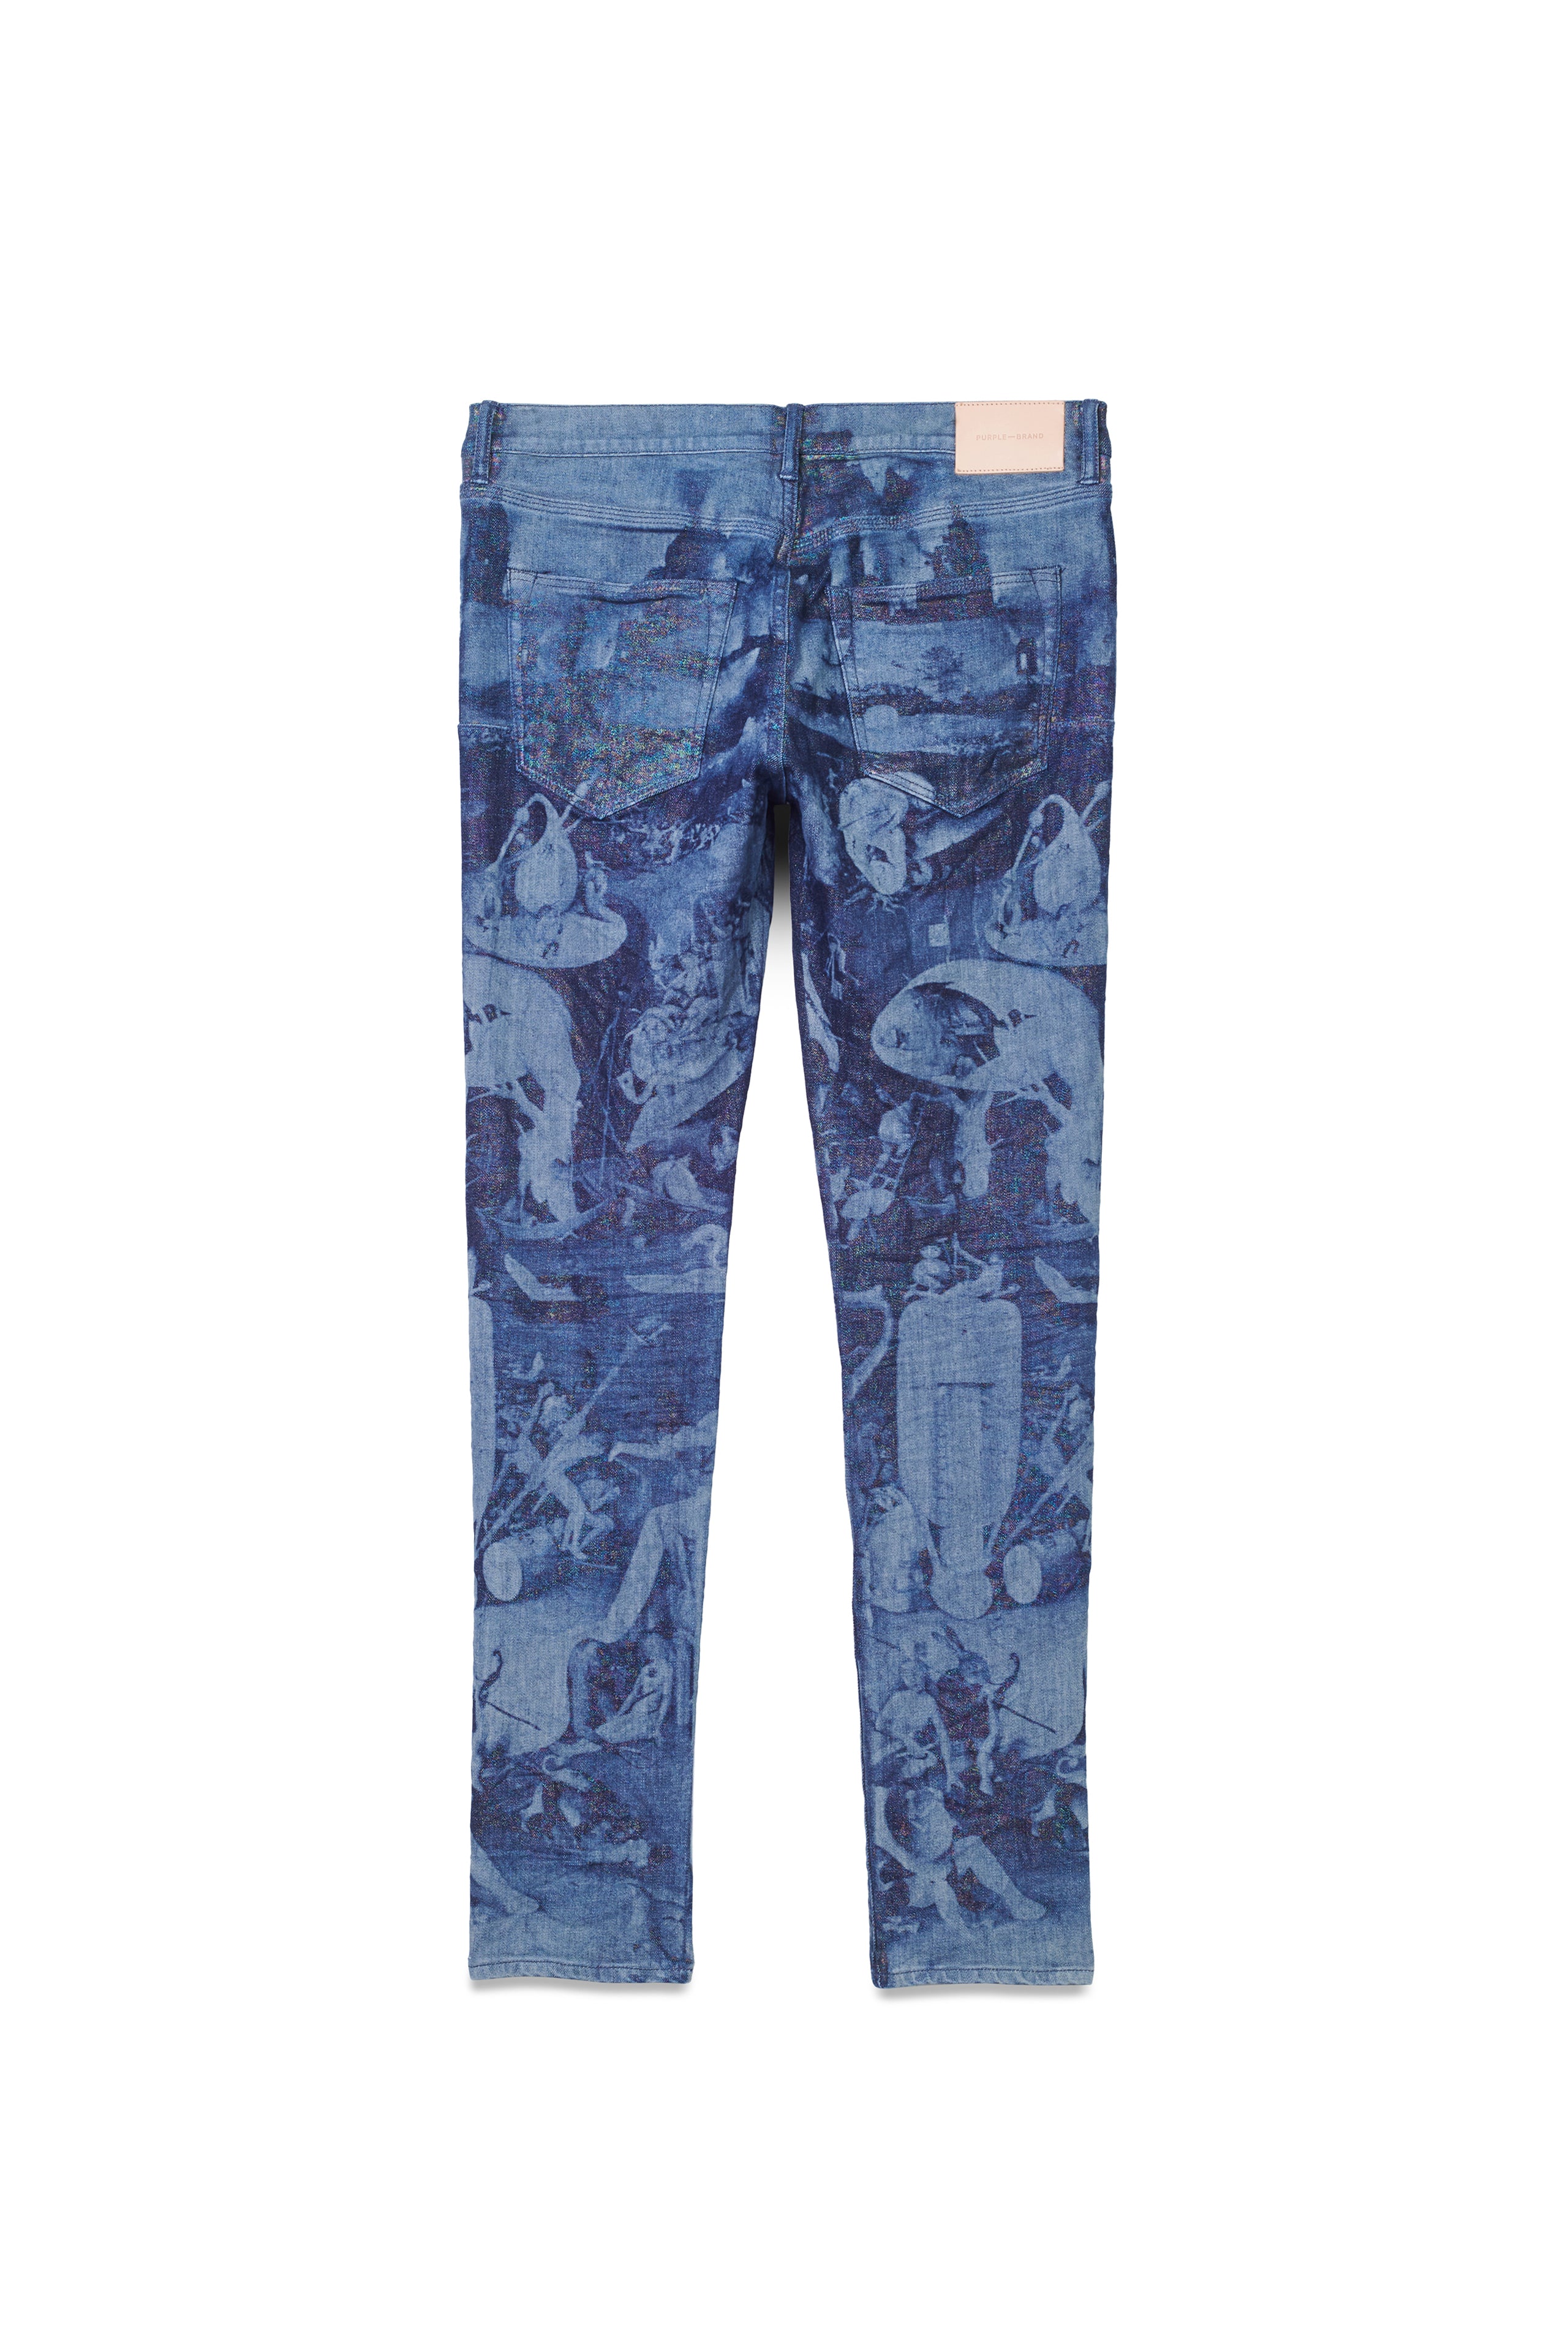 Buy PURPLE BRAND Low Rise Skinny Jeans 'Light Indigo/Neon' - P001